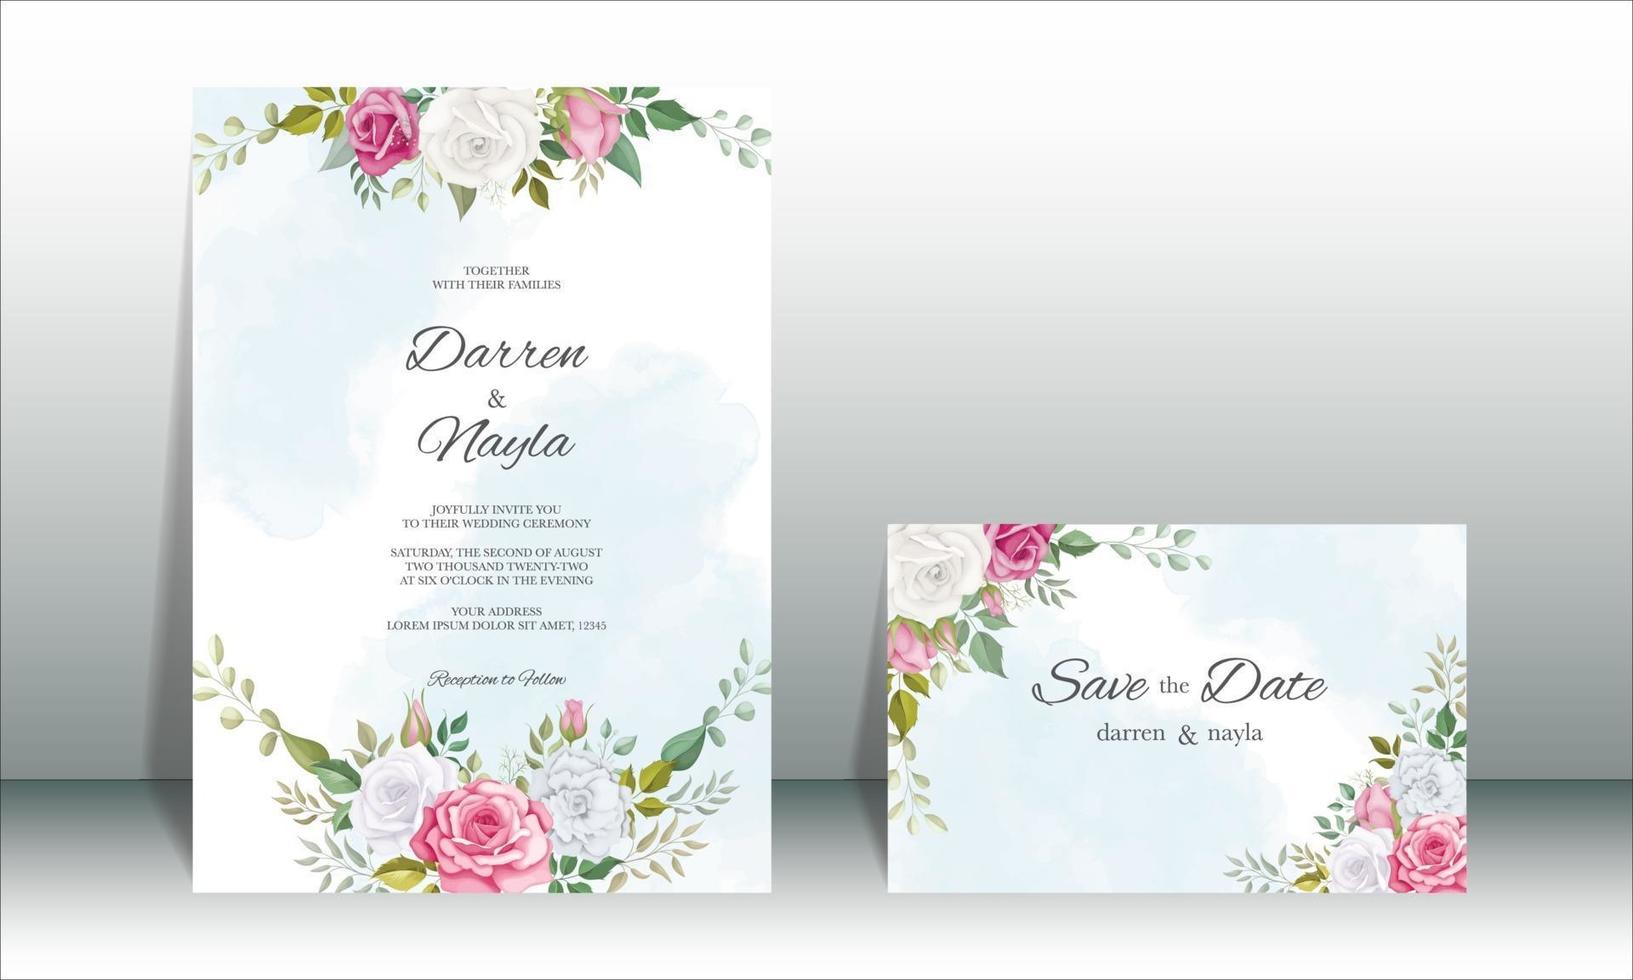 Beautiful floral wedding invitation card template design vector